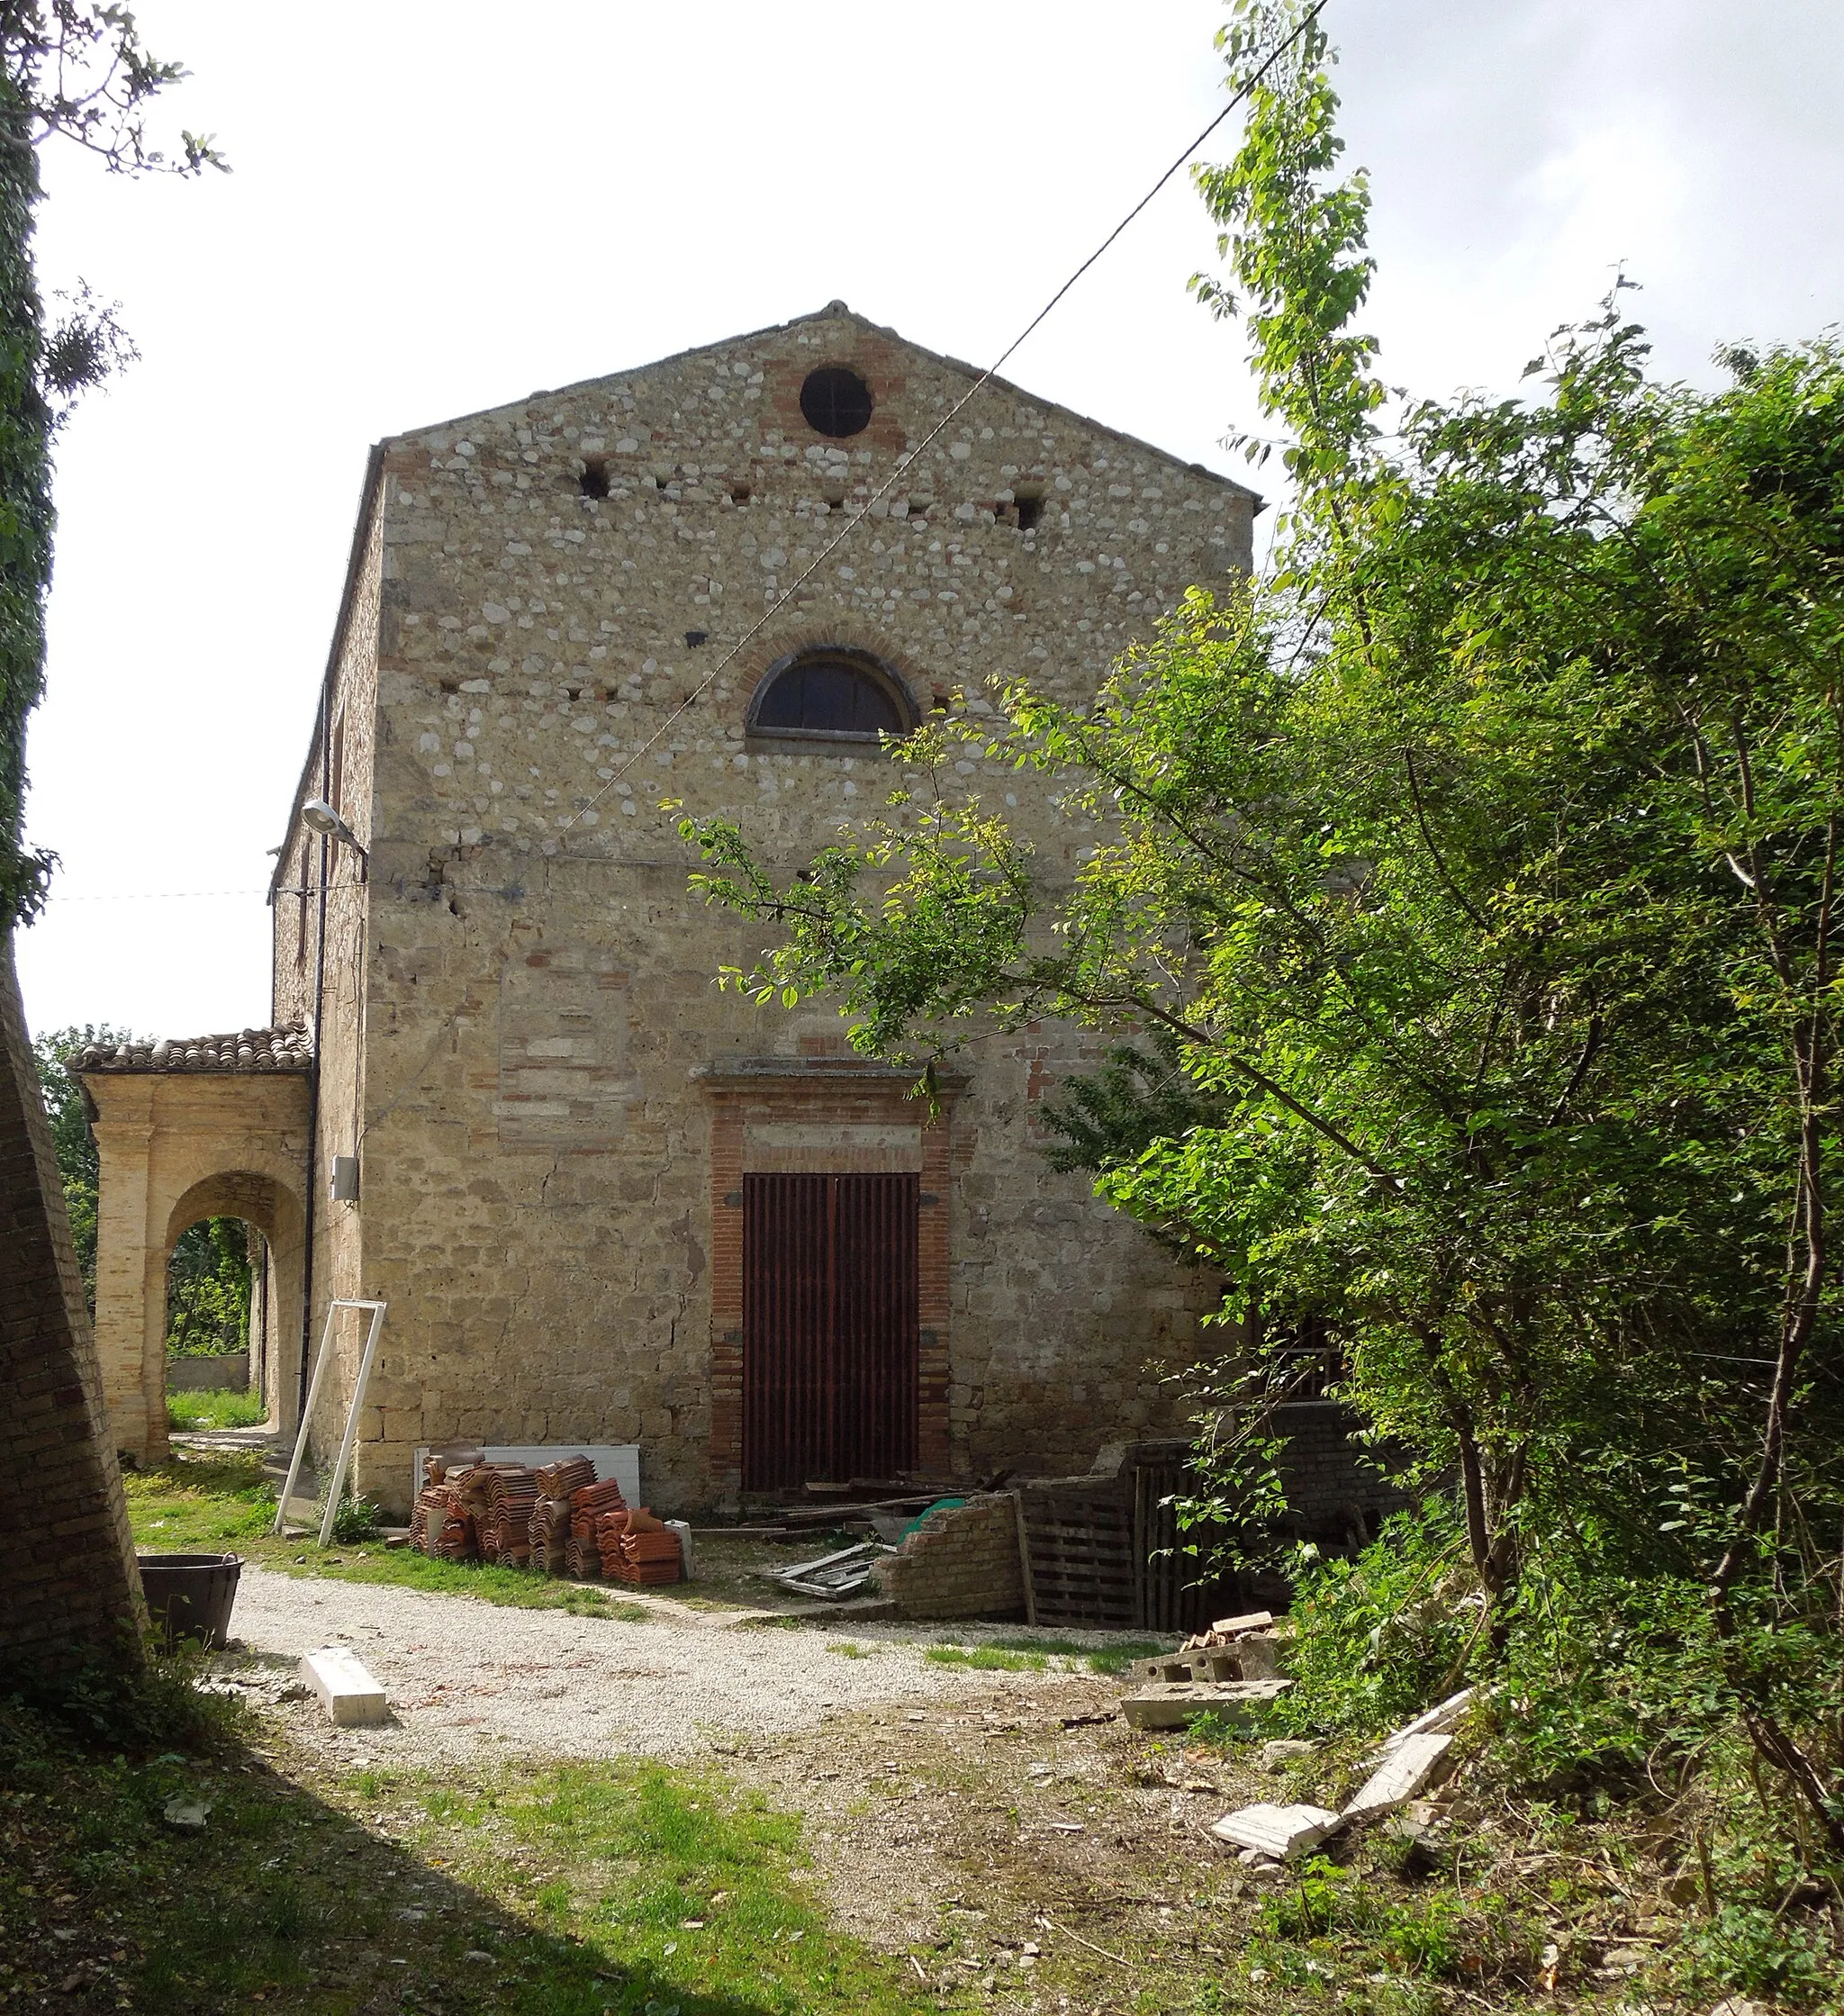 Zdjęcie: Sant'Egidio alla Vibrata